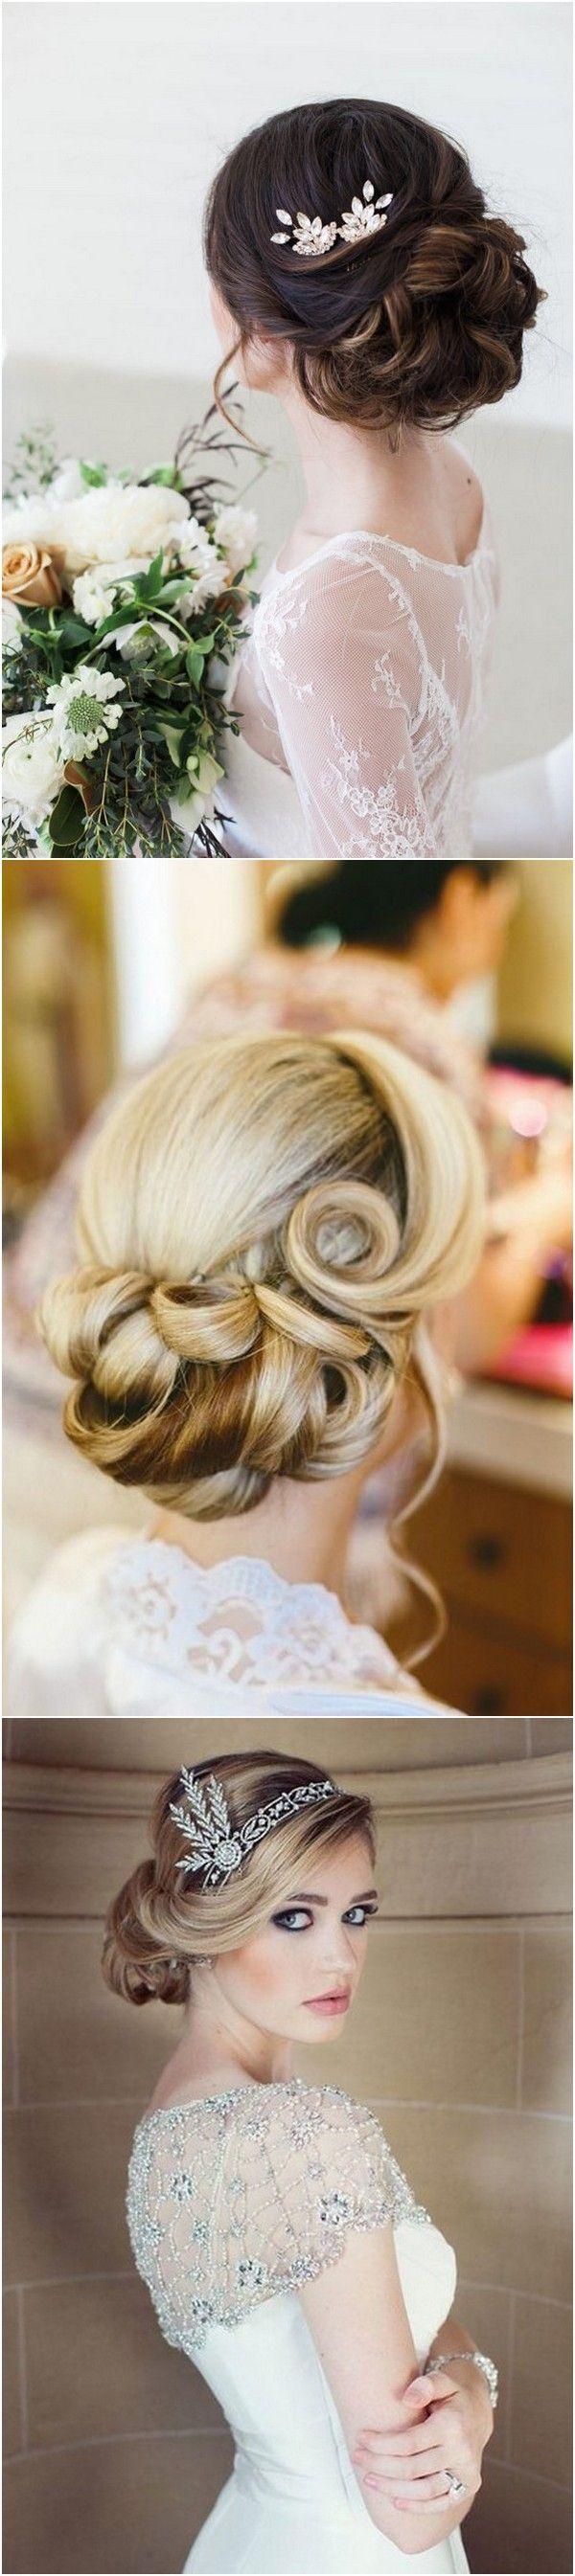 Wedding - Top 20 Vintage Wedding Hairstyles For Brides